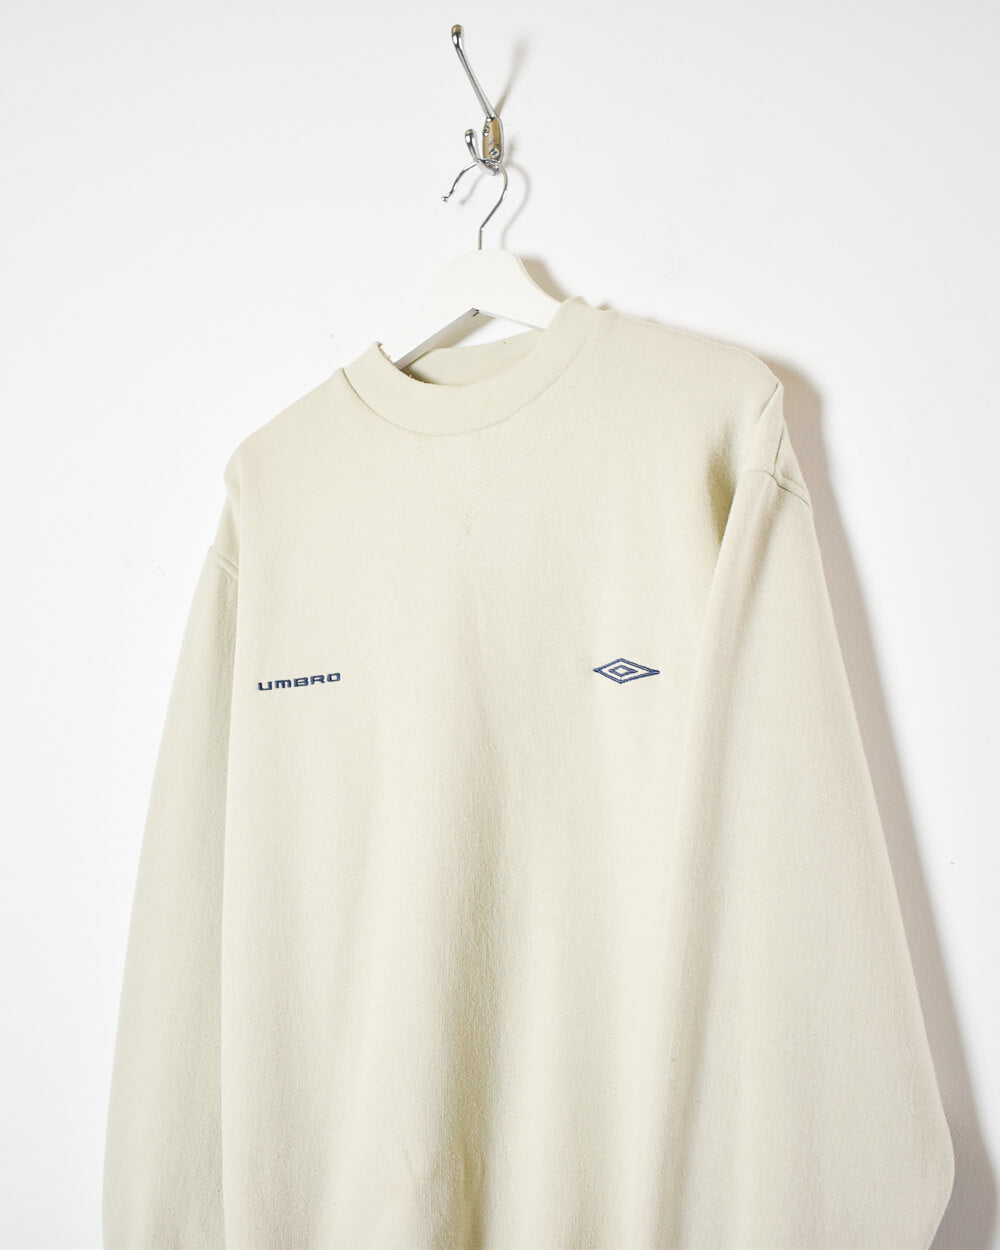 Neutral Umbro Sweatshirt - Large